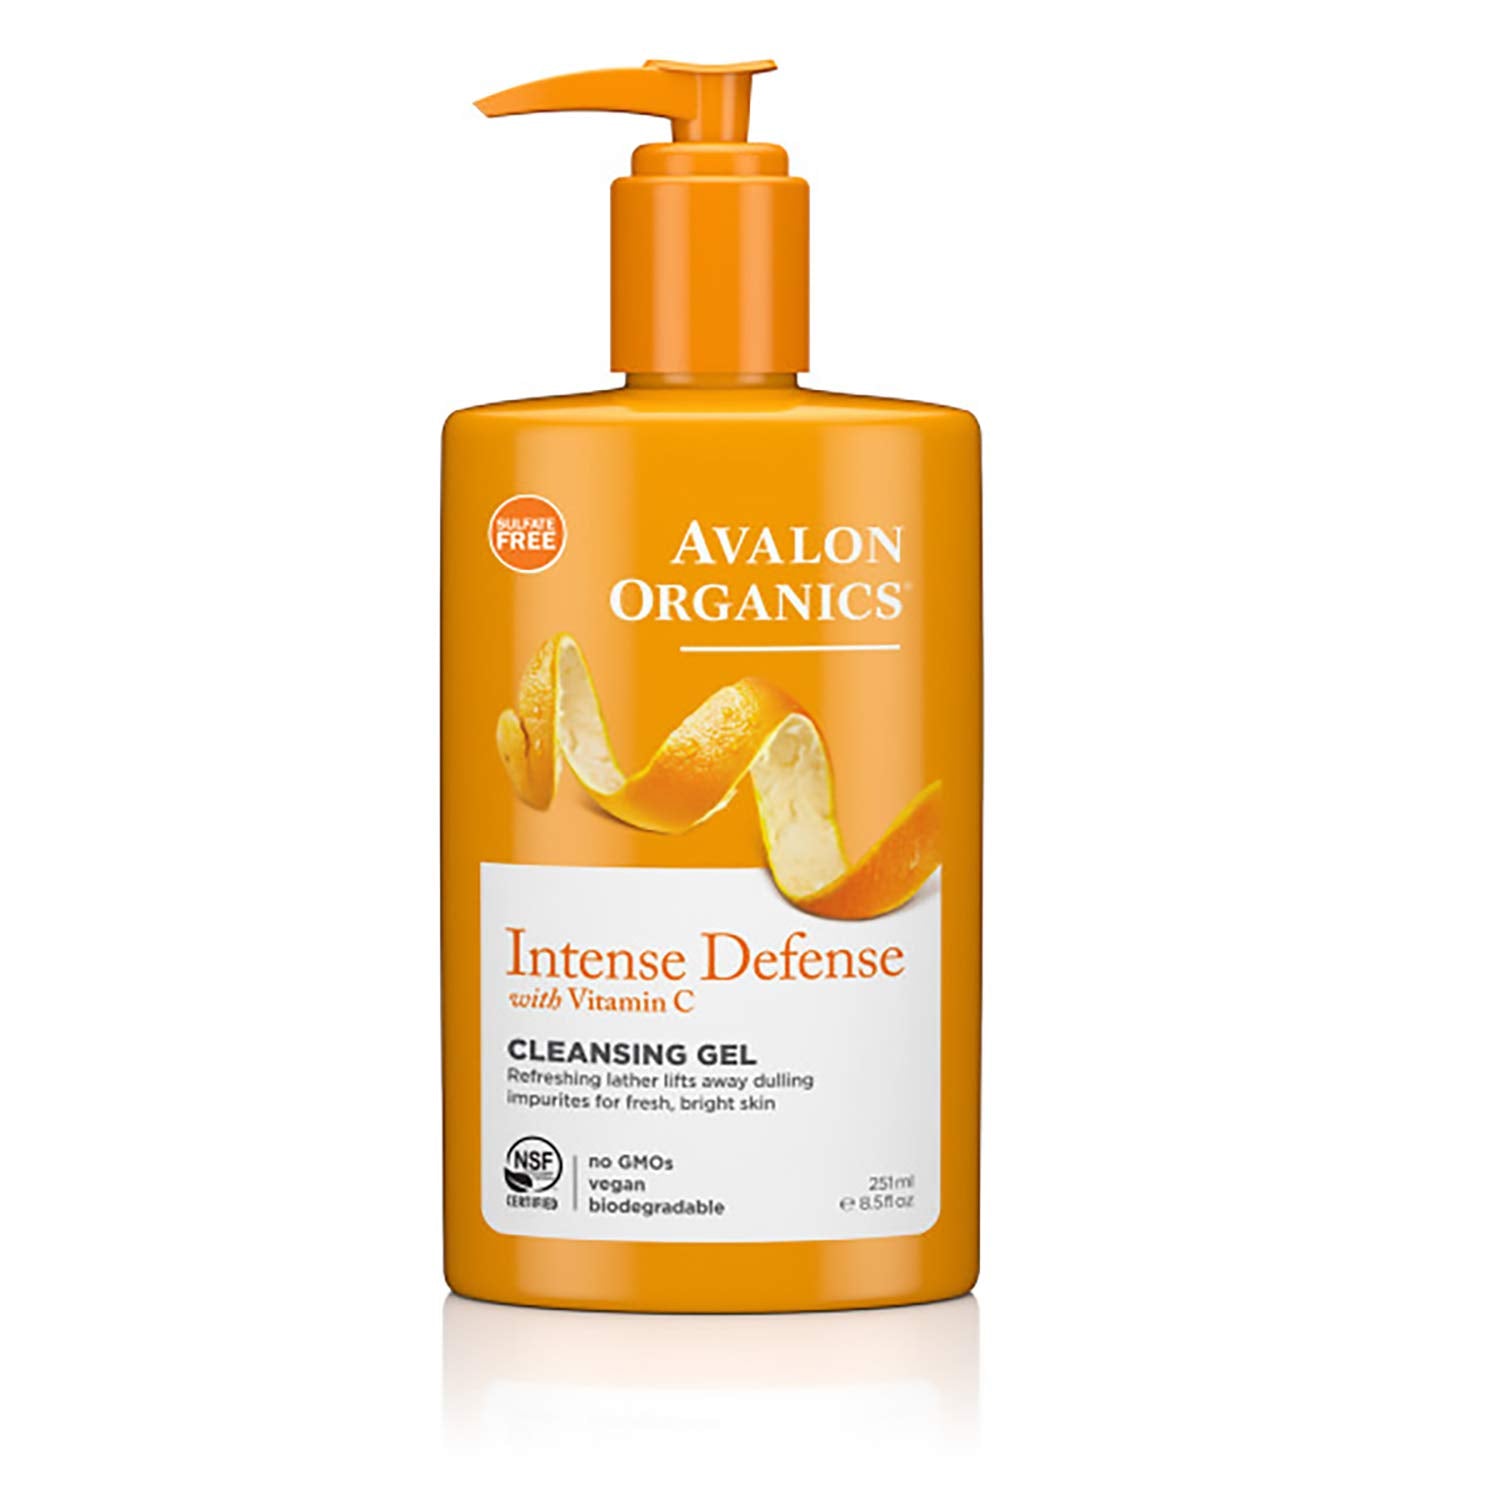 Avalon Organics Intense Defense Cleansing Gel, 8.5 oz.